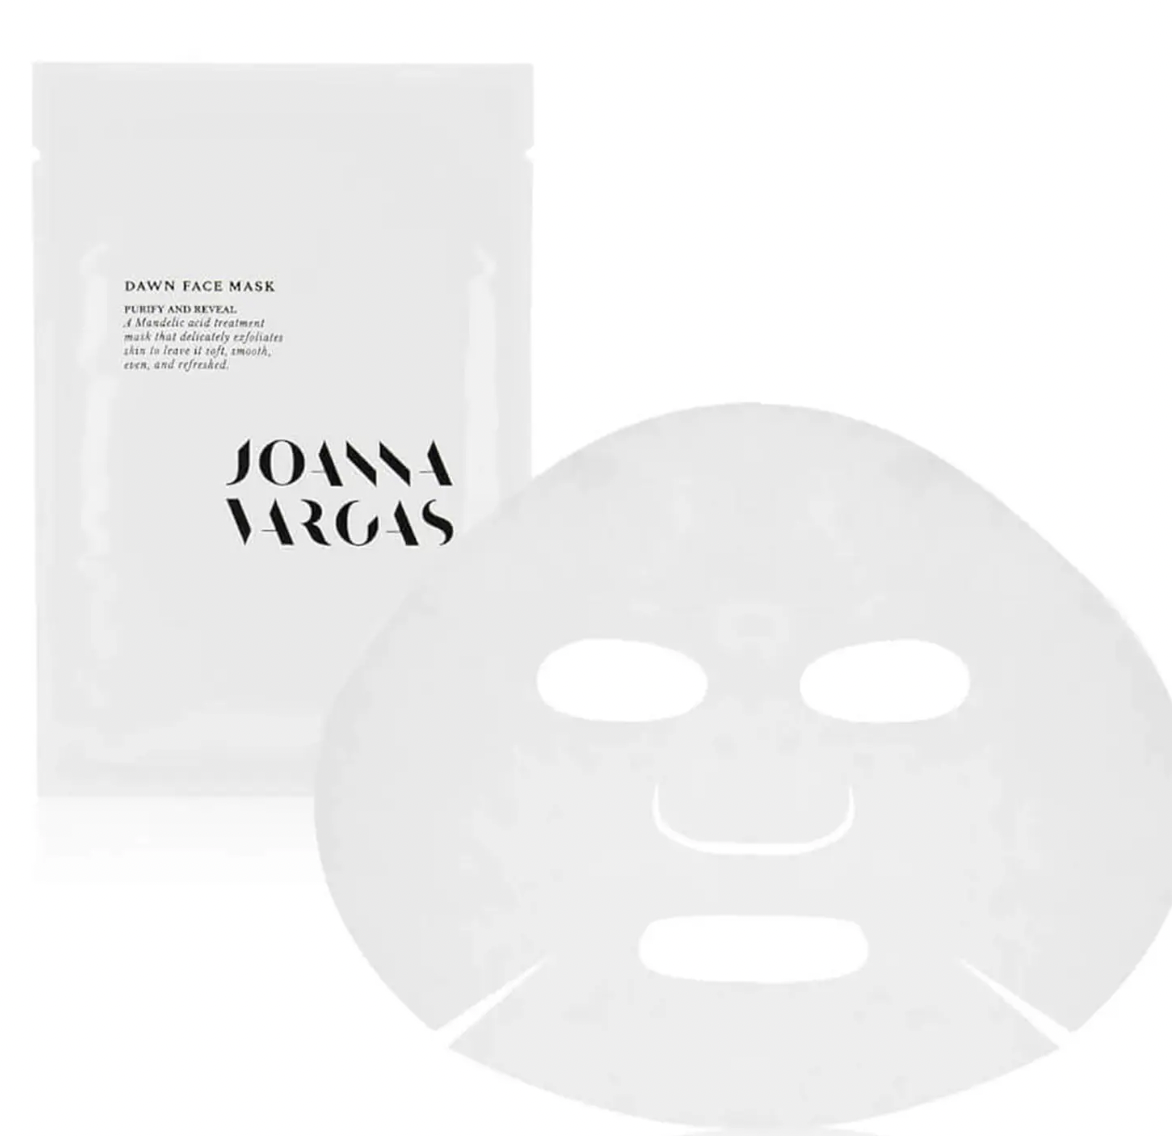 Dermstore Joanna Vargas Dawn Face Mask $75